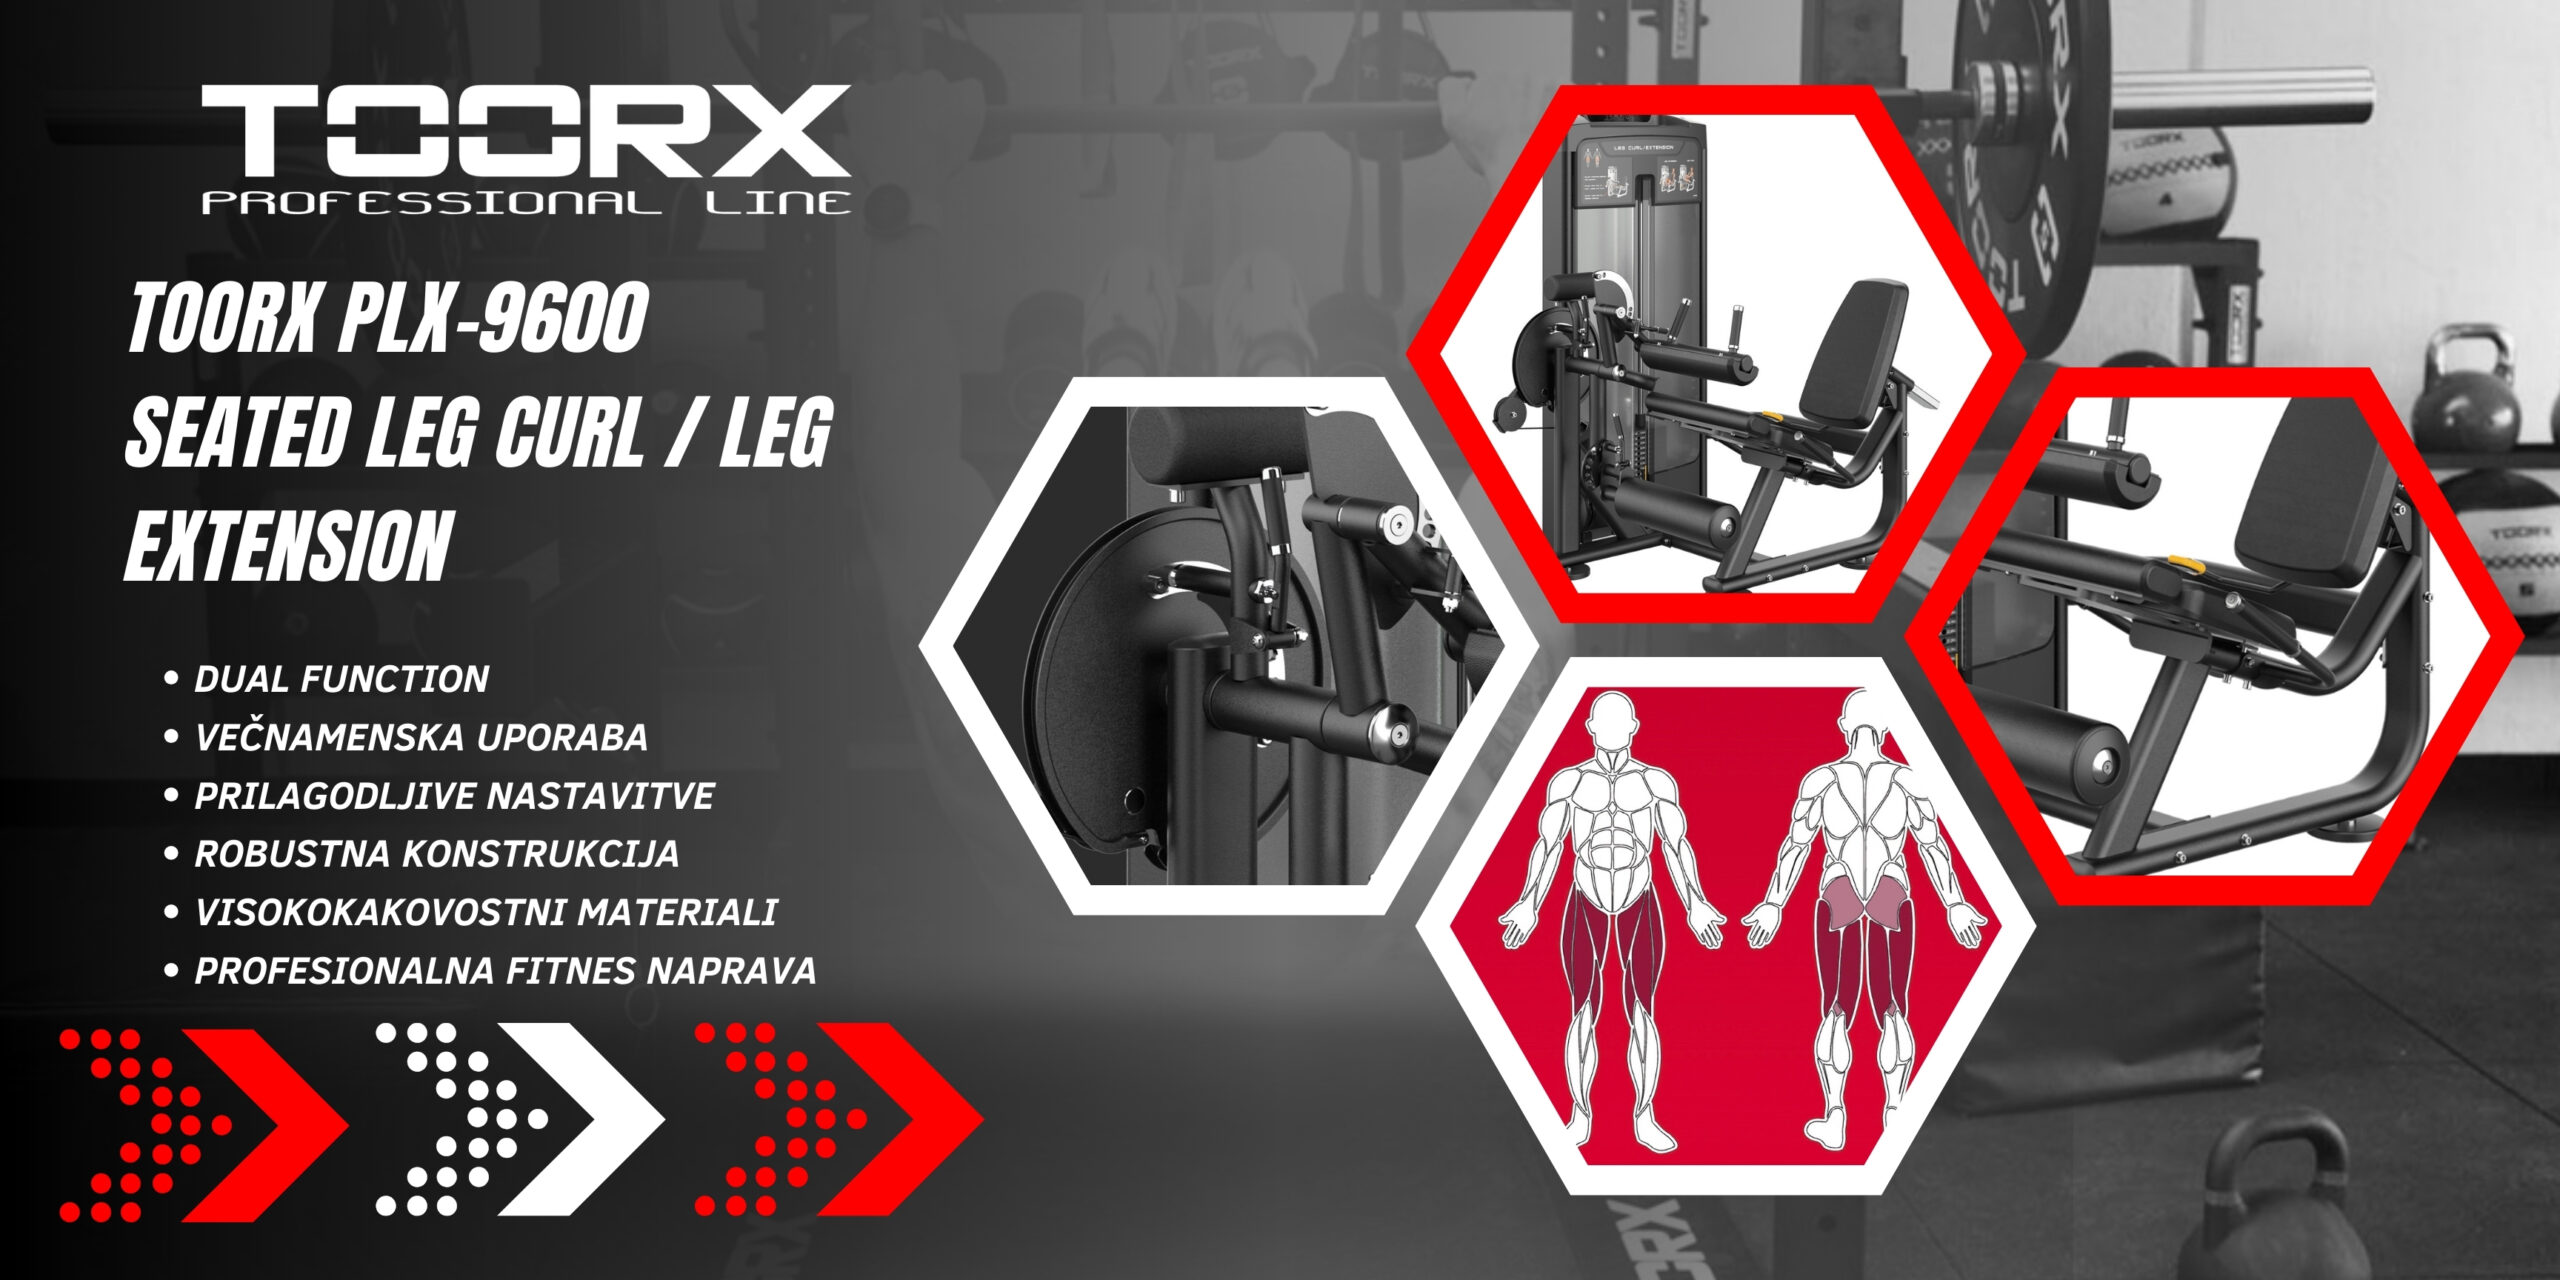 Toorx PLX-9600 Seated Leg Curl / Leg Extension - dual function - profesionalna fitnes naprava za izteg in upogib nog - pin loaded